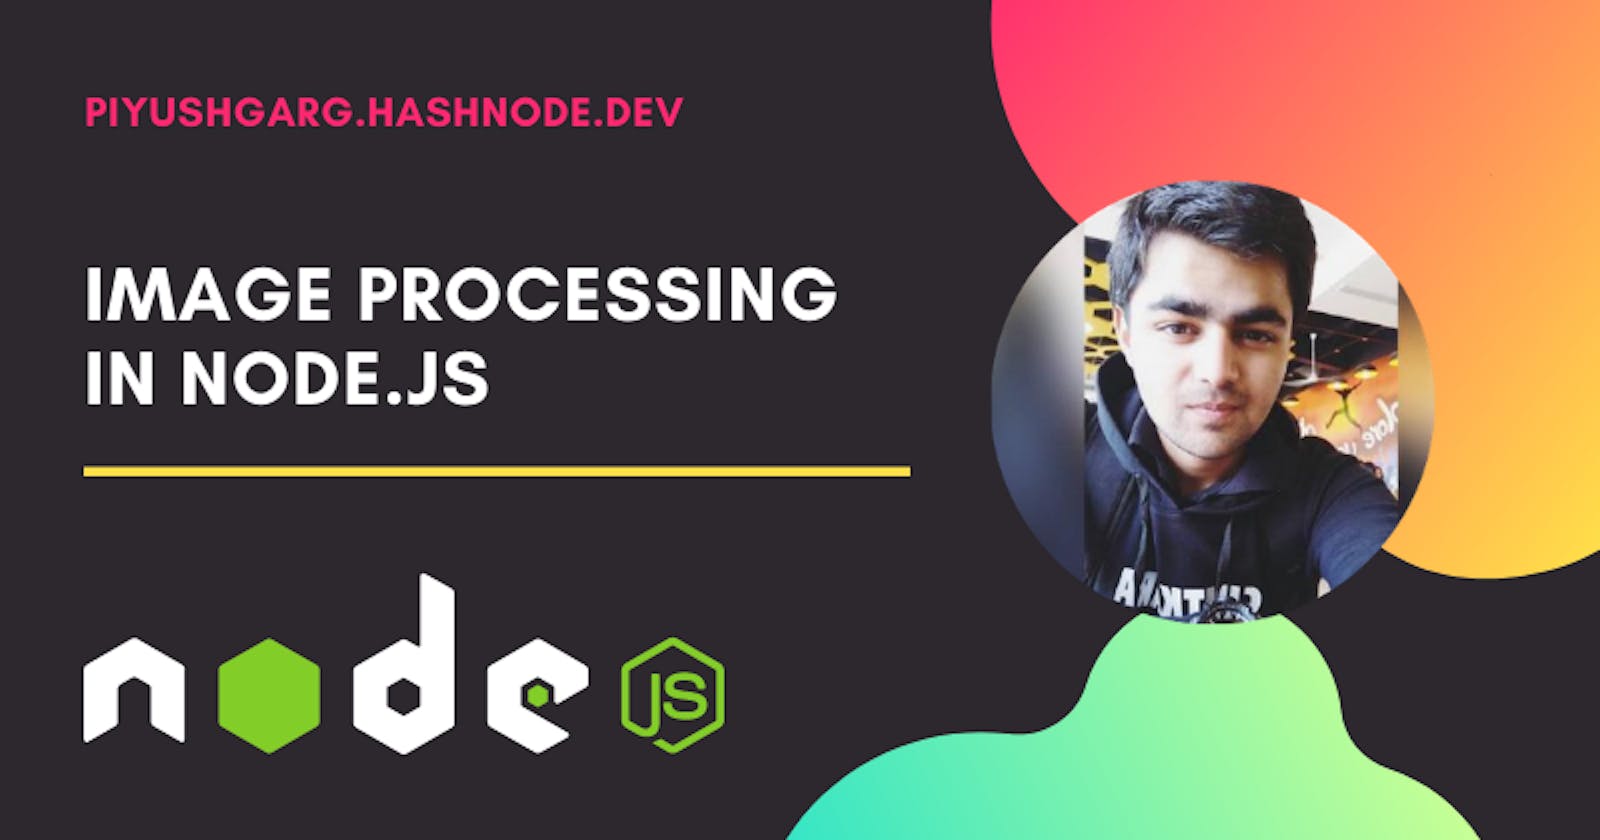 Image processing in node.js